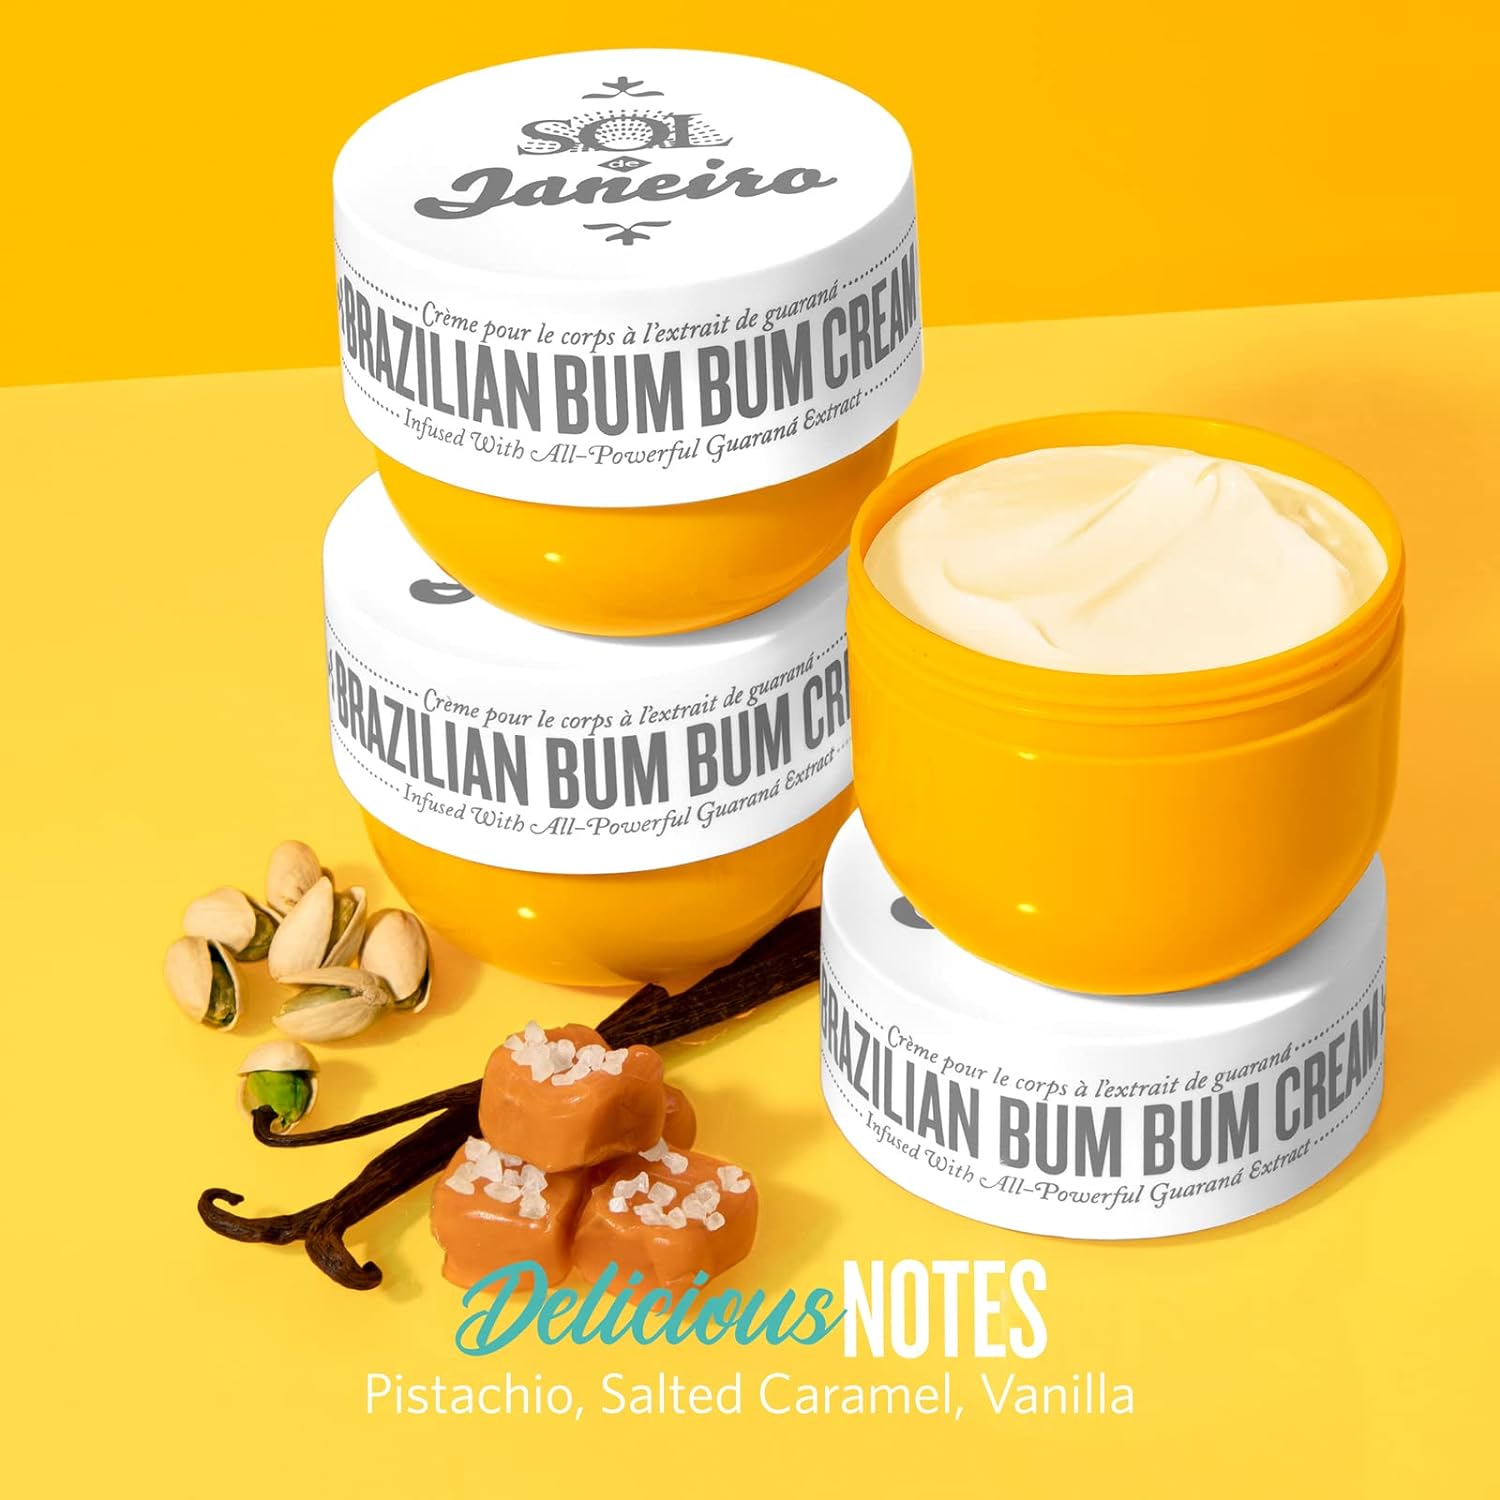 SOL DE JANEIRO Brazilian Bum Bum & Beija Flor Cream Bundle - Moisturizer for Dry Skin, Vegan, Paraben-Free, Antioxidant, 6.76 Fl Oz